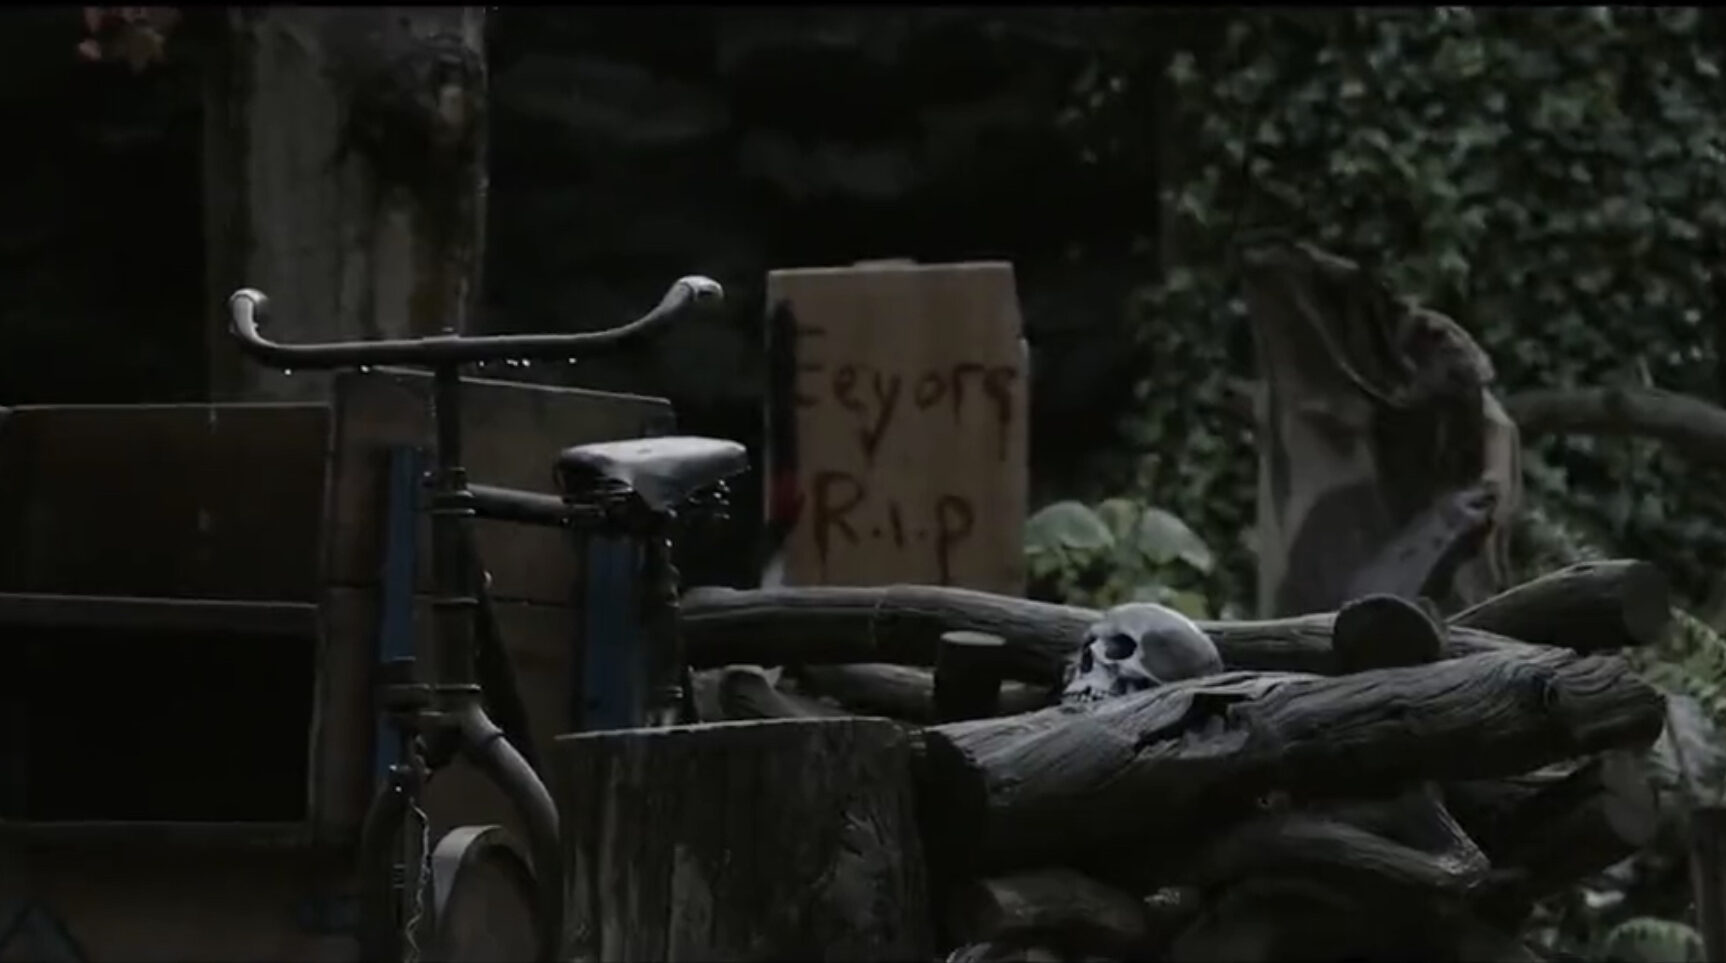 A cardboard sign reads Eyor RIP